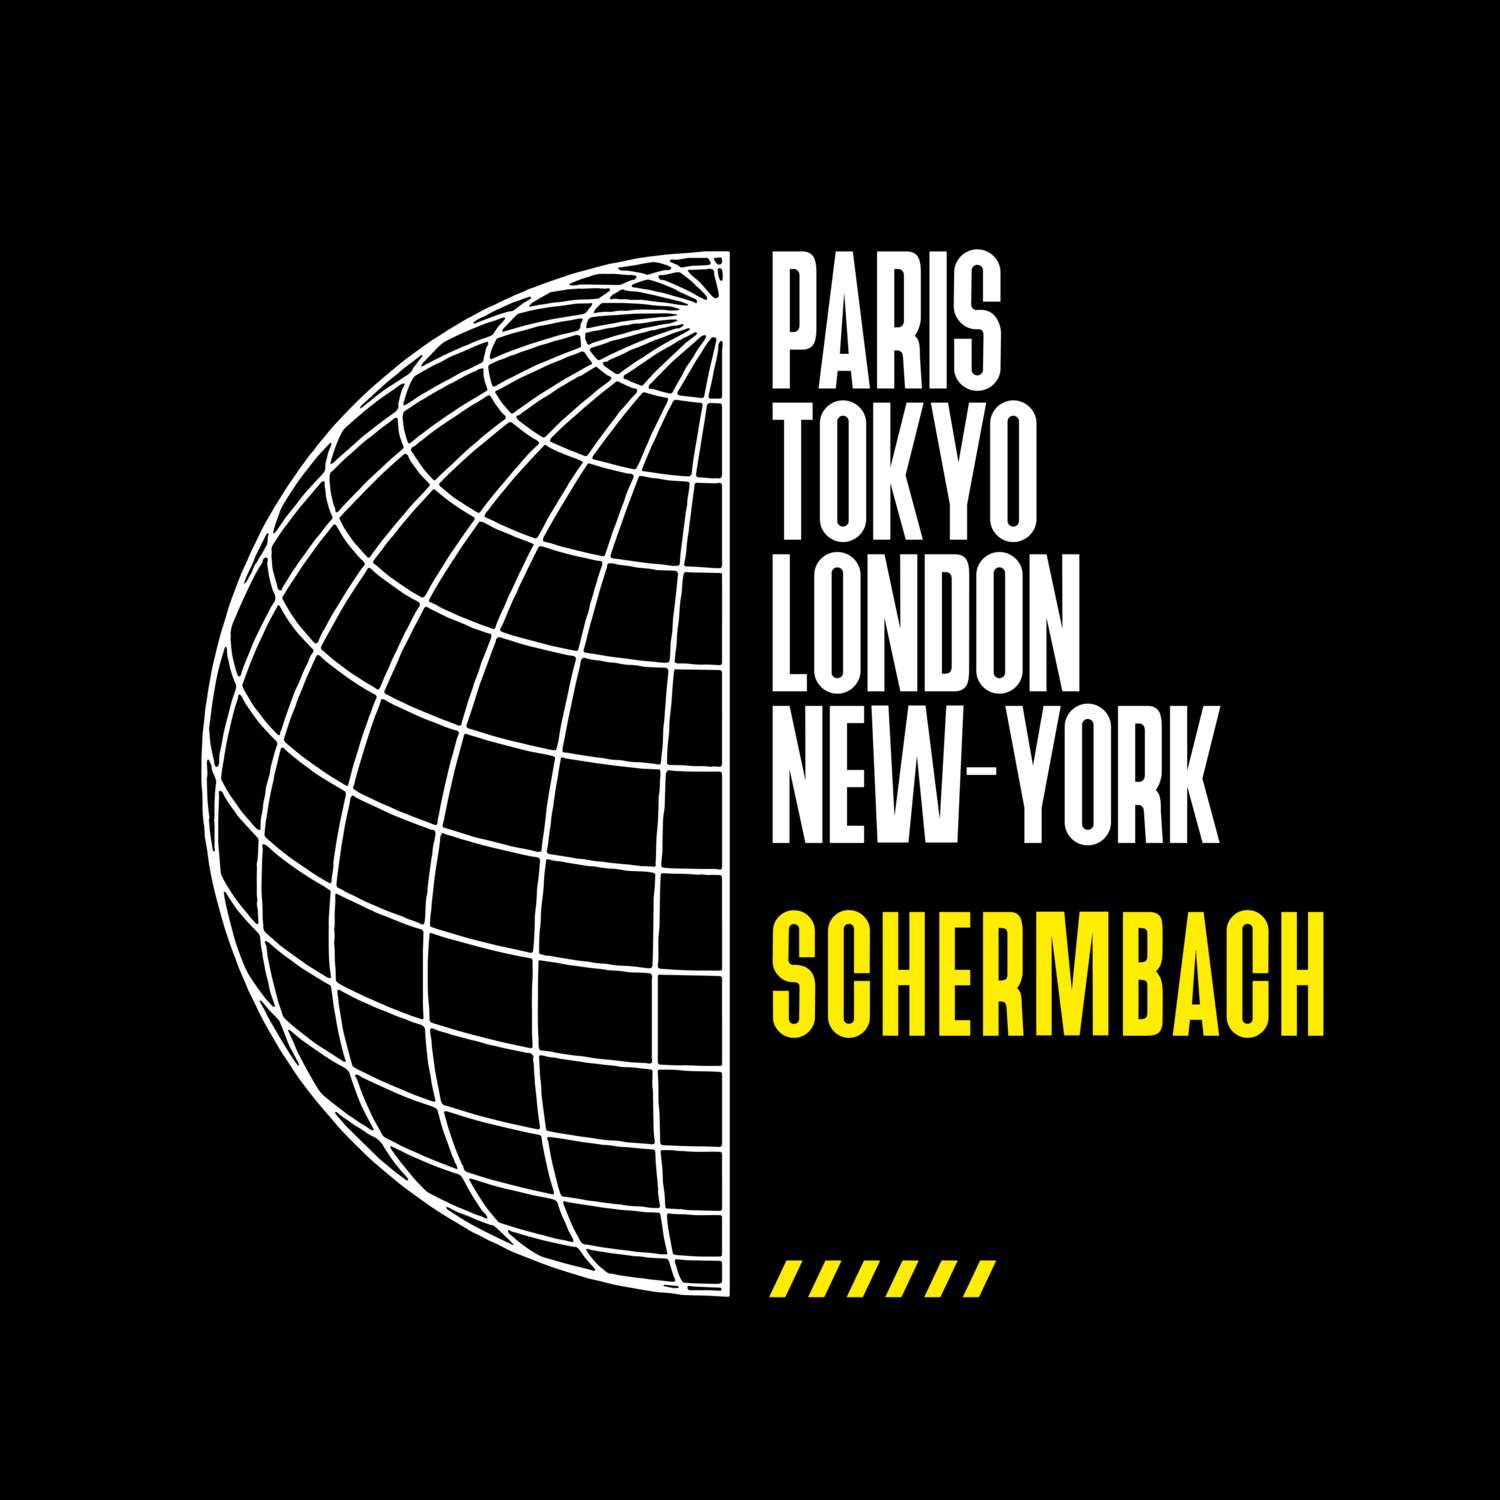 Schermbach T-Shirt »Paris Tokyo London«